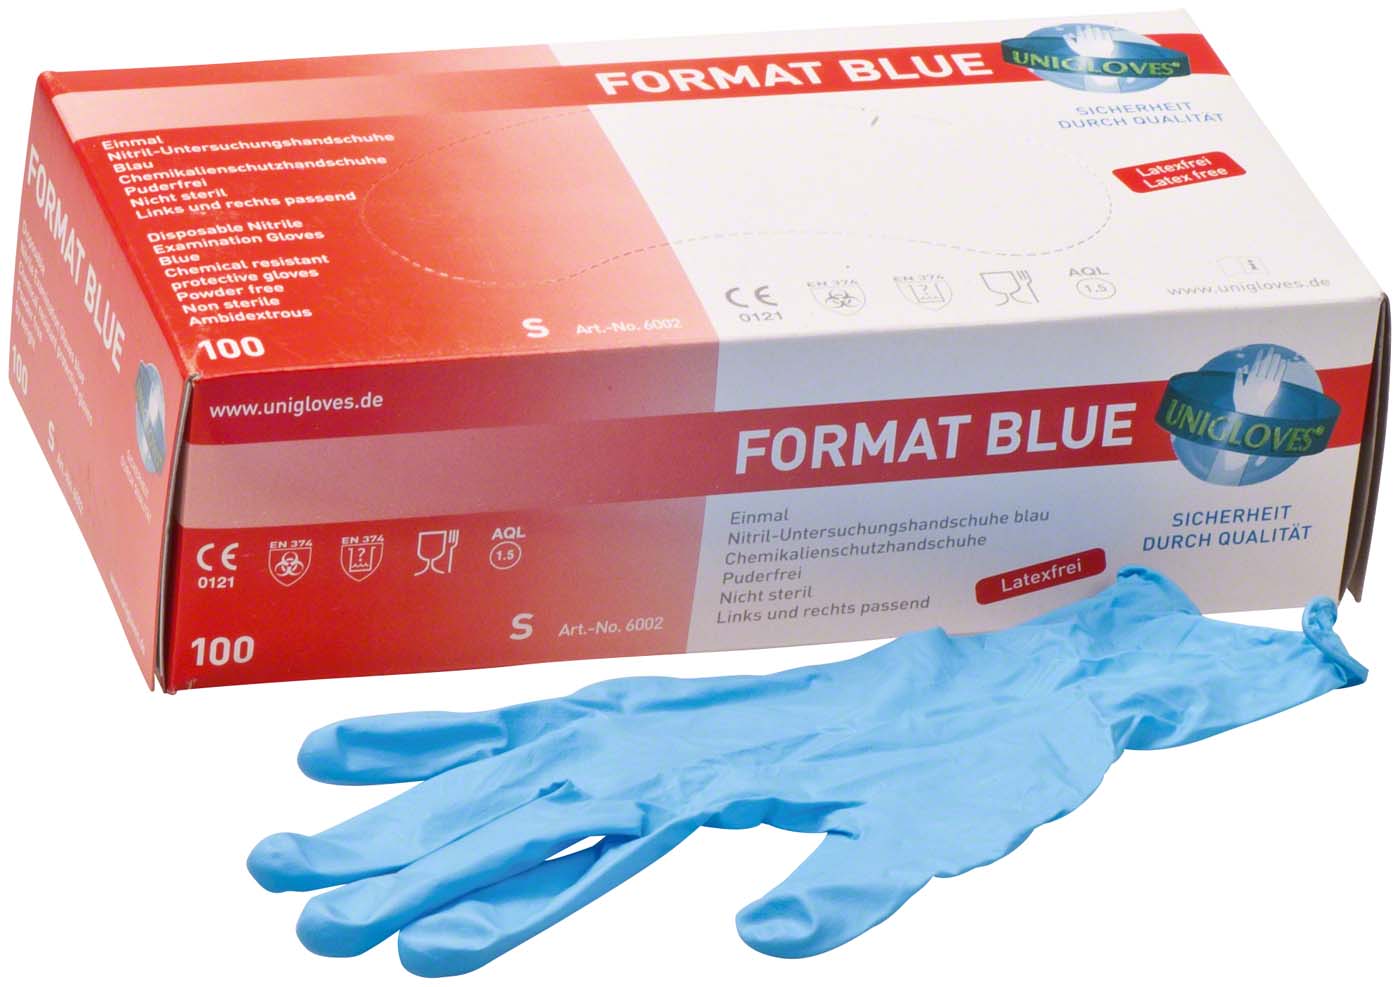 FORMAT BLUE Unigloves